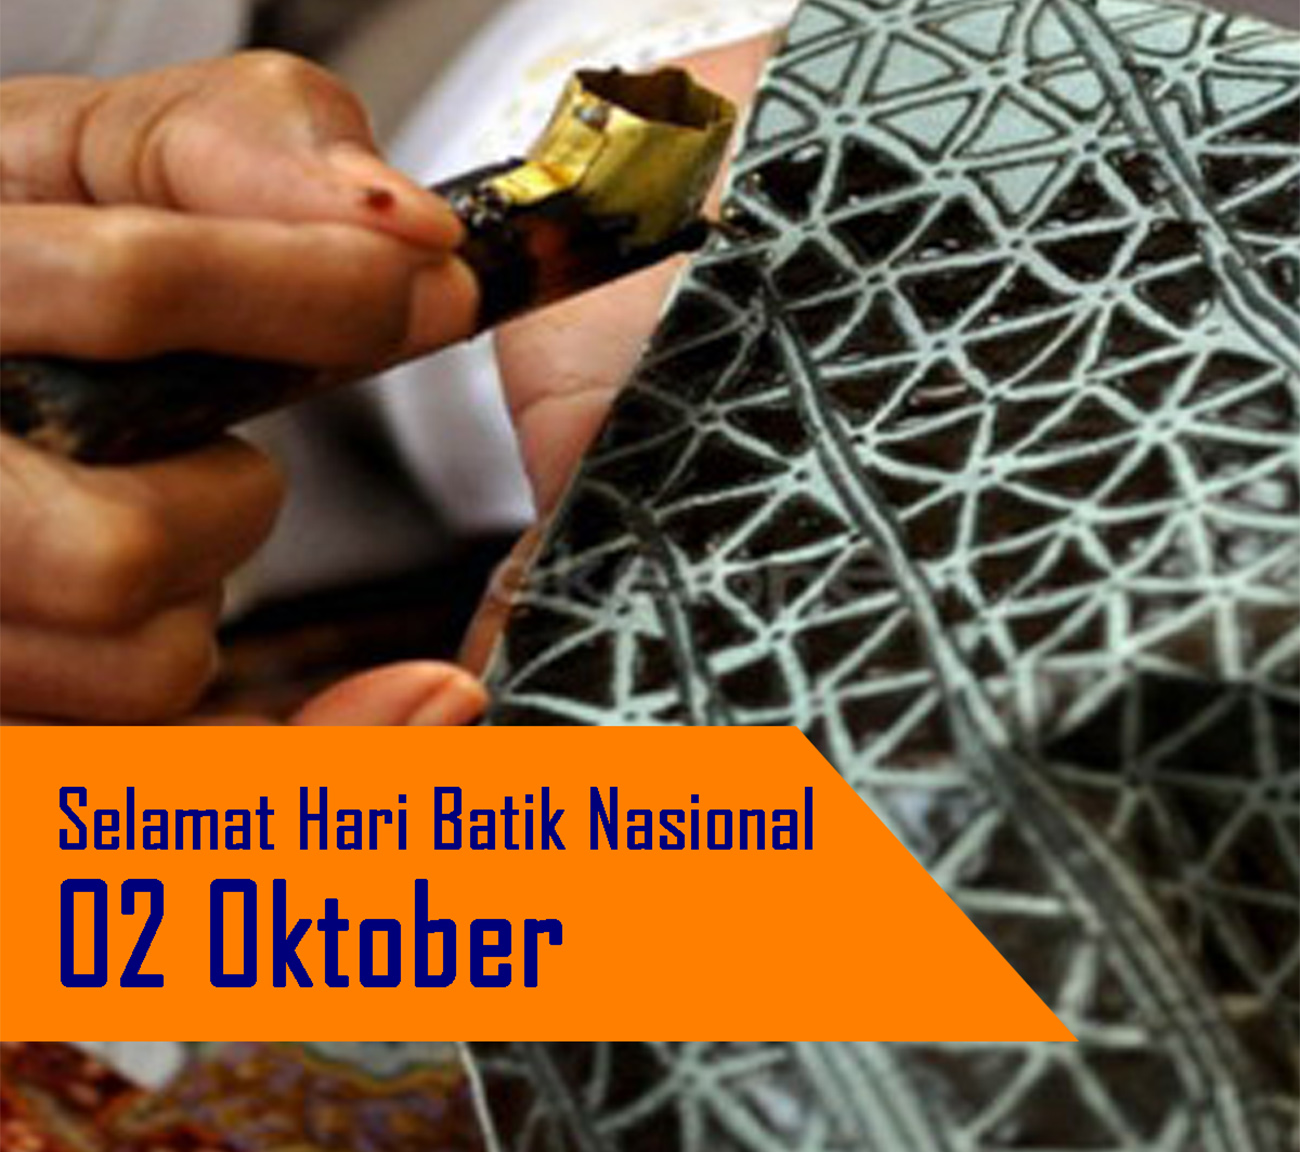 Sejarah Hari Batik Nasional (Lengkap) - MARKIJAR.Com